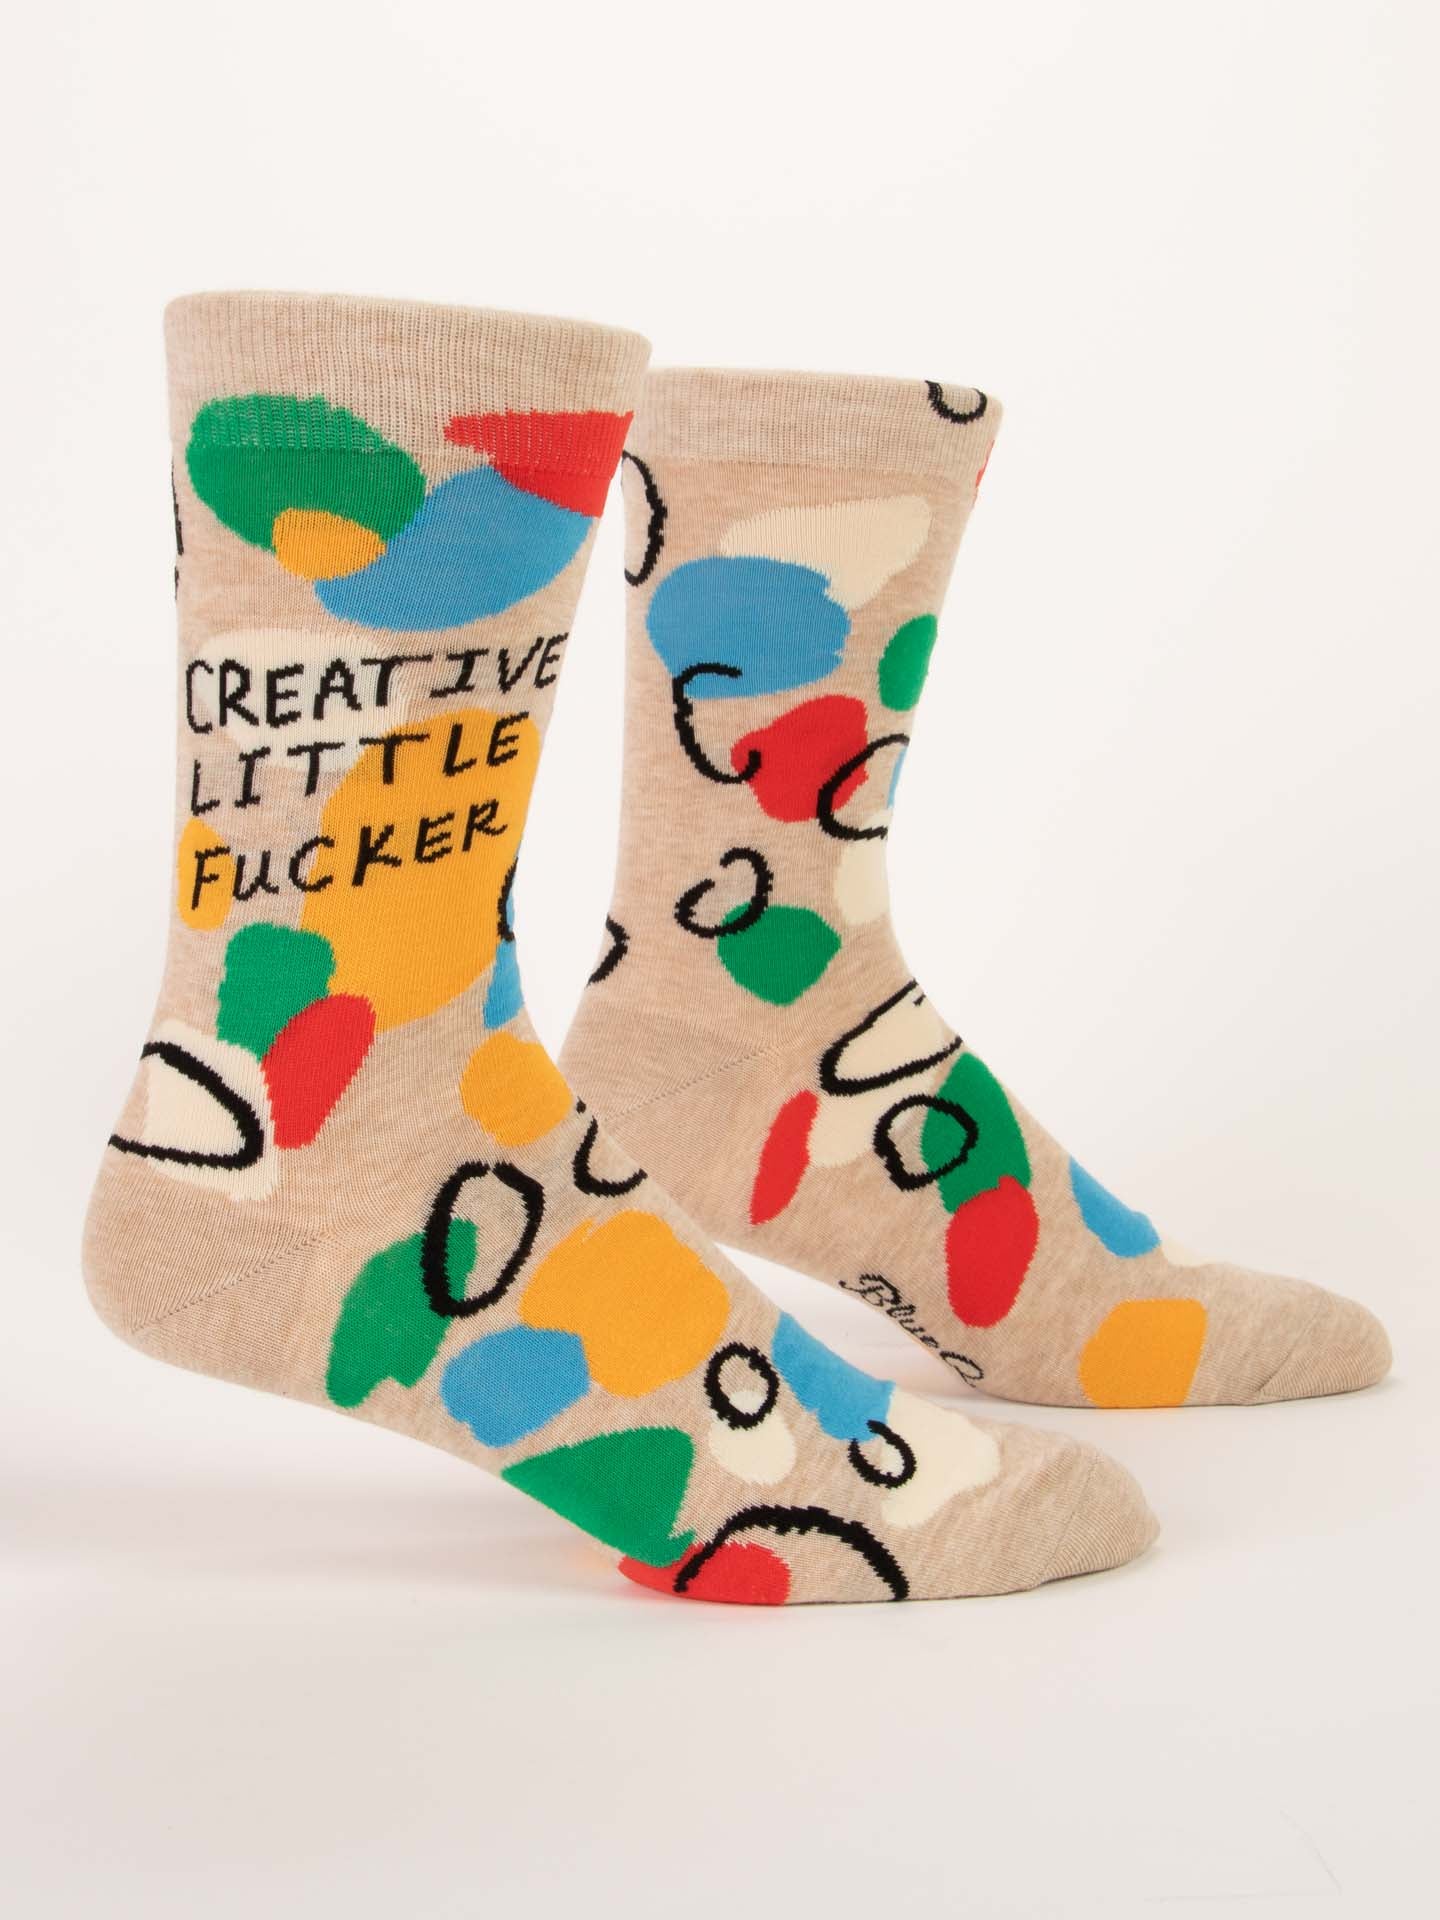 Creative Little Fucker Socks